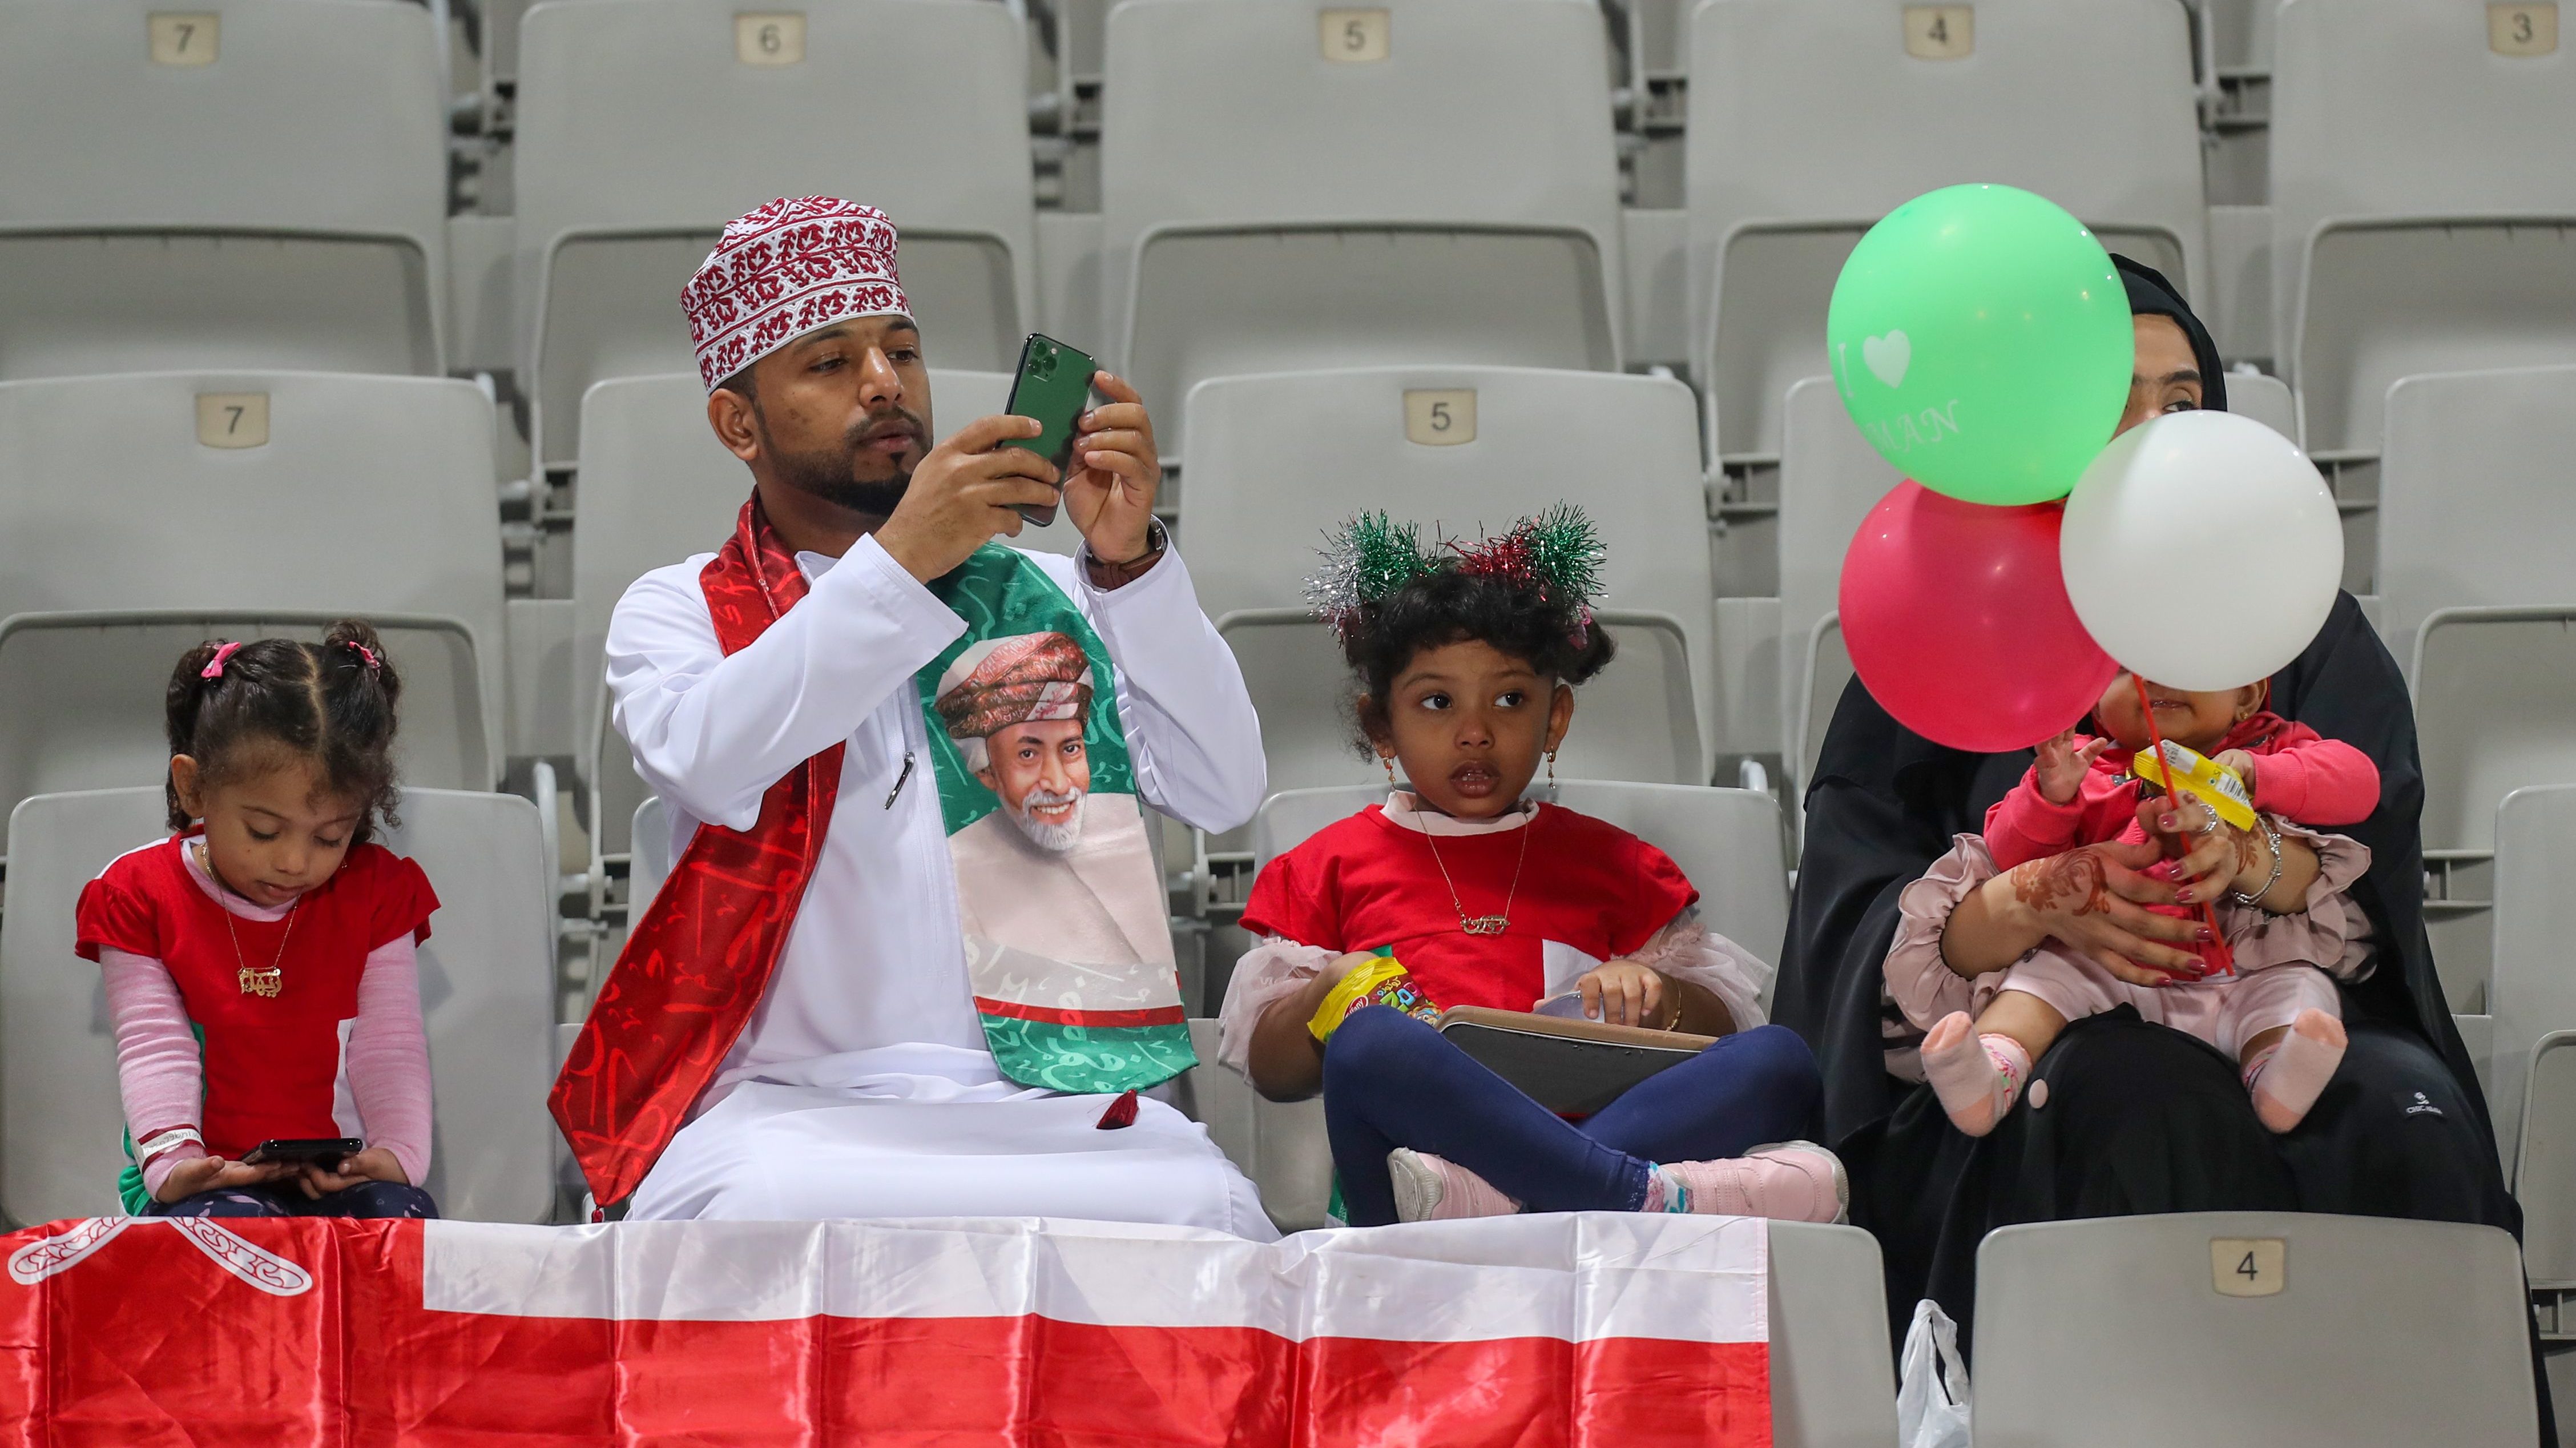 Cautious Optimism over Boycott Permeates Gulf Cup